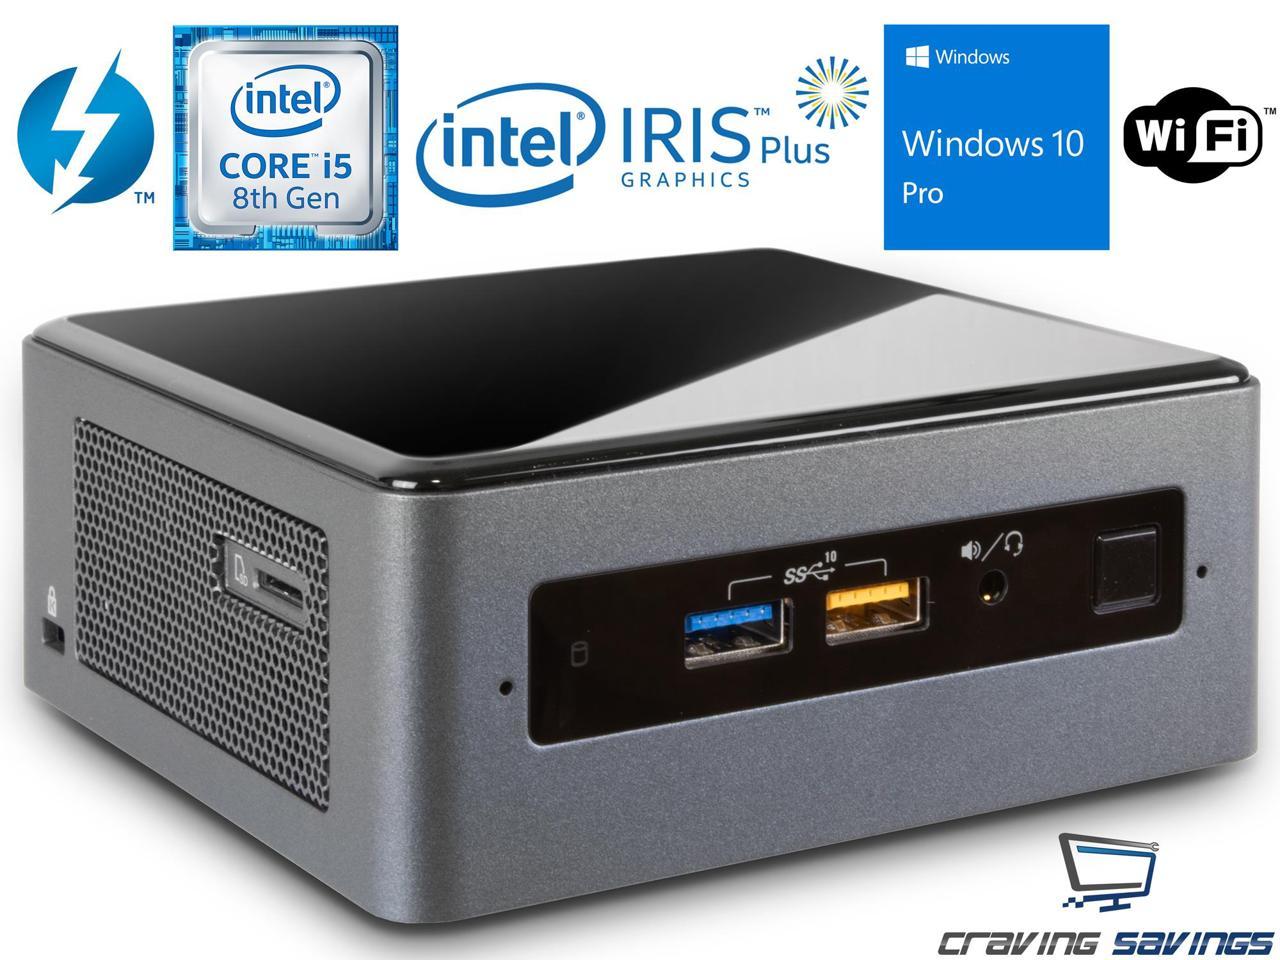 Intel NUC8i5BEK Mini PC/HTPC, Intel Core i5-8259U Up to 3.8GHz, 16GB DDR4, 256GB NVMe SSD, Wifi, Bluetooth 5.0, 4K Support, Dual Monitor Capable, Windows 10 Pro